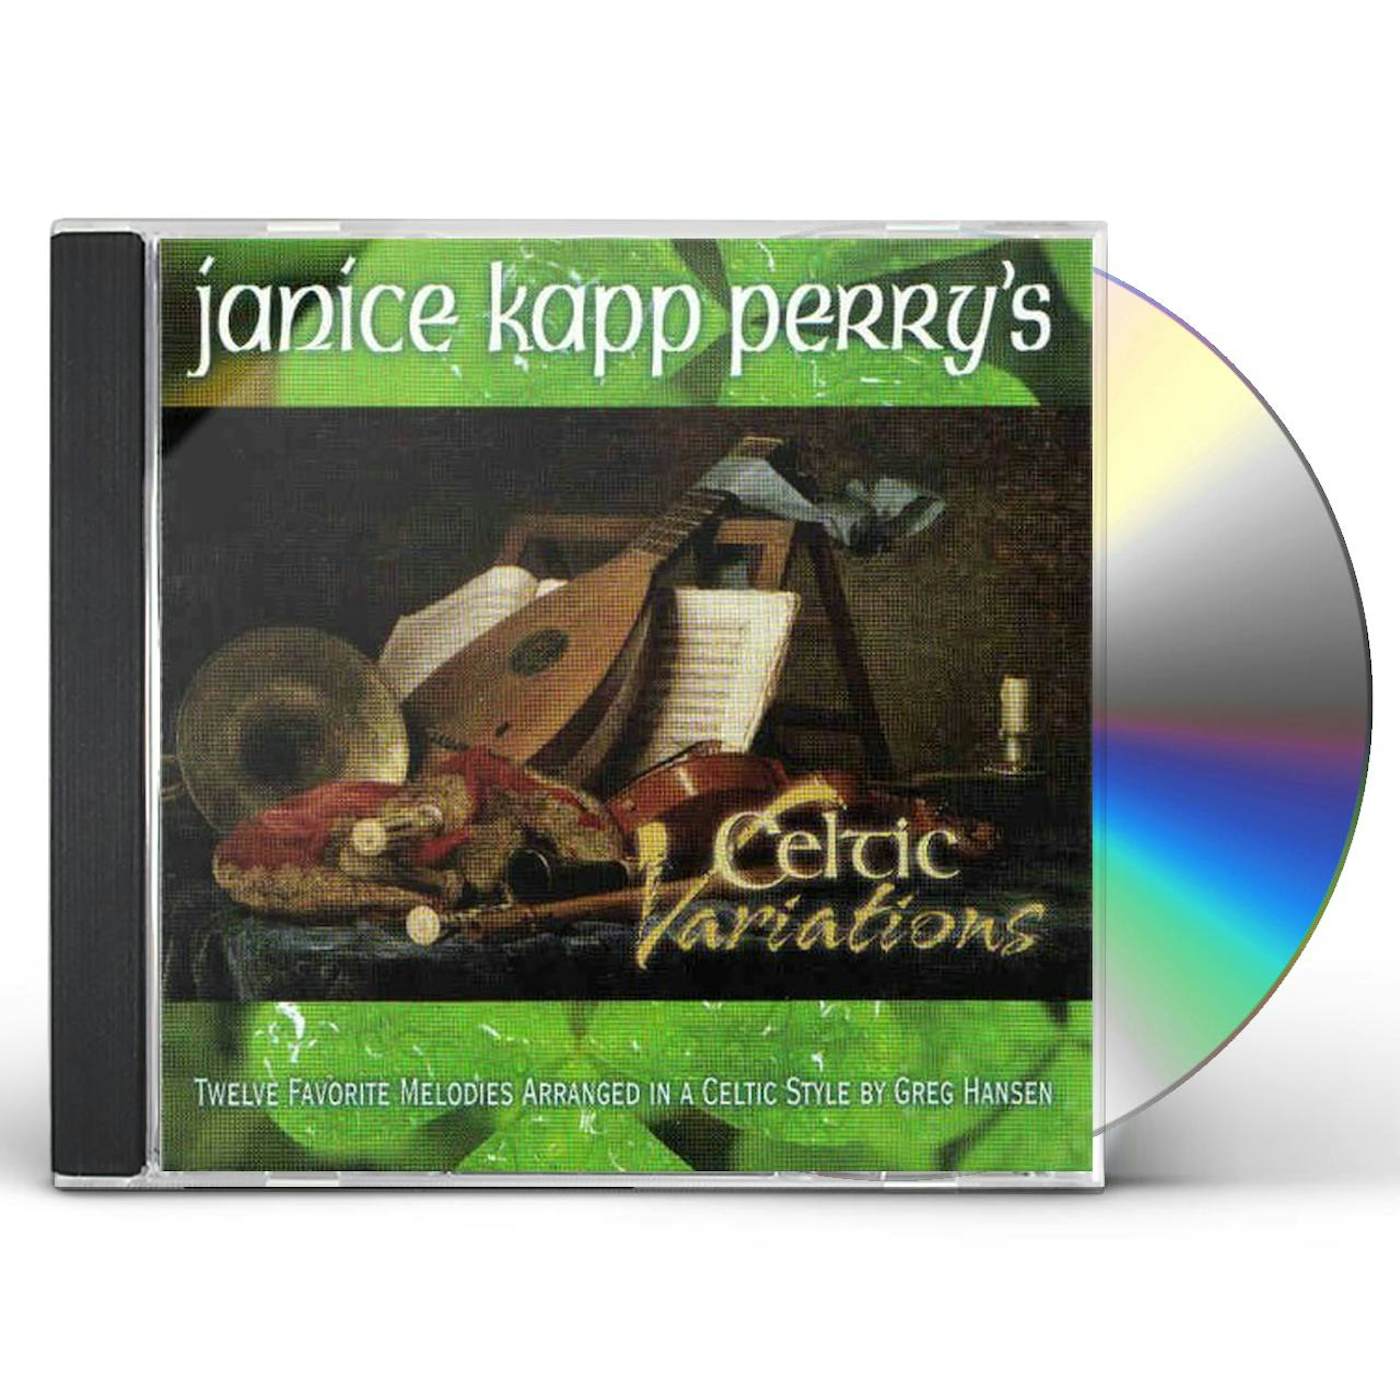 JANICE KAPP PERRY'S CELTIC VARIATIONS CD